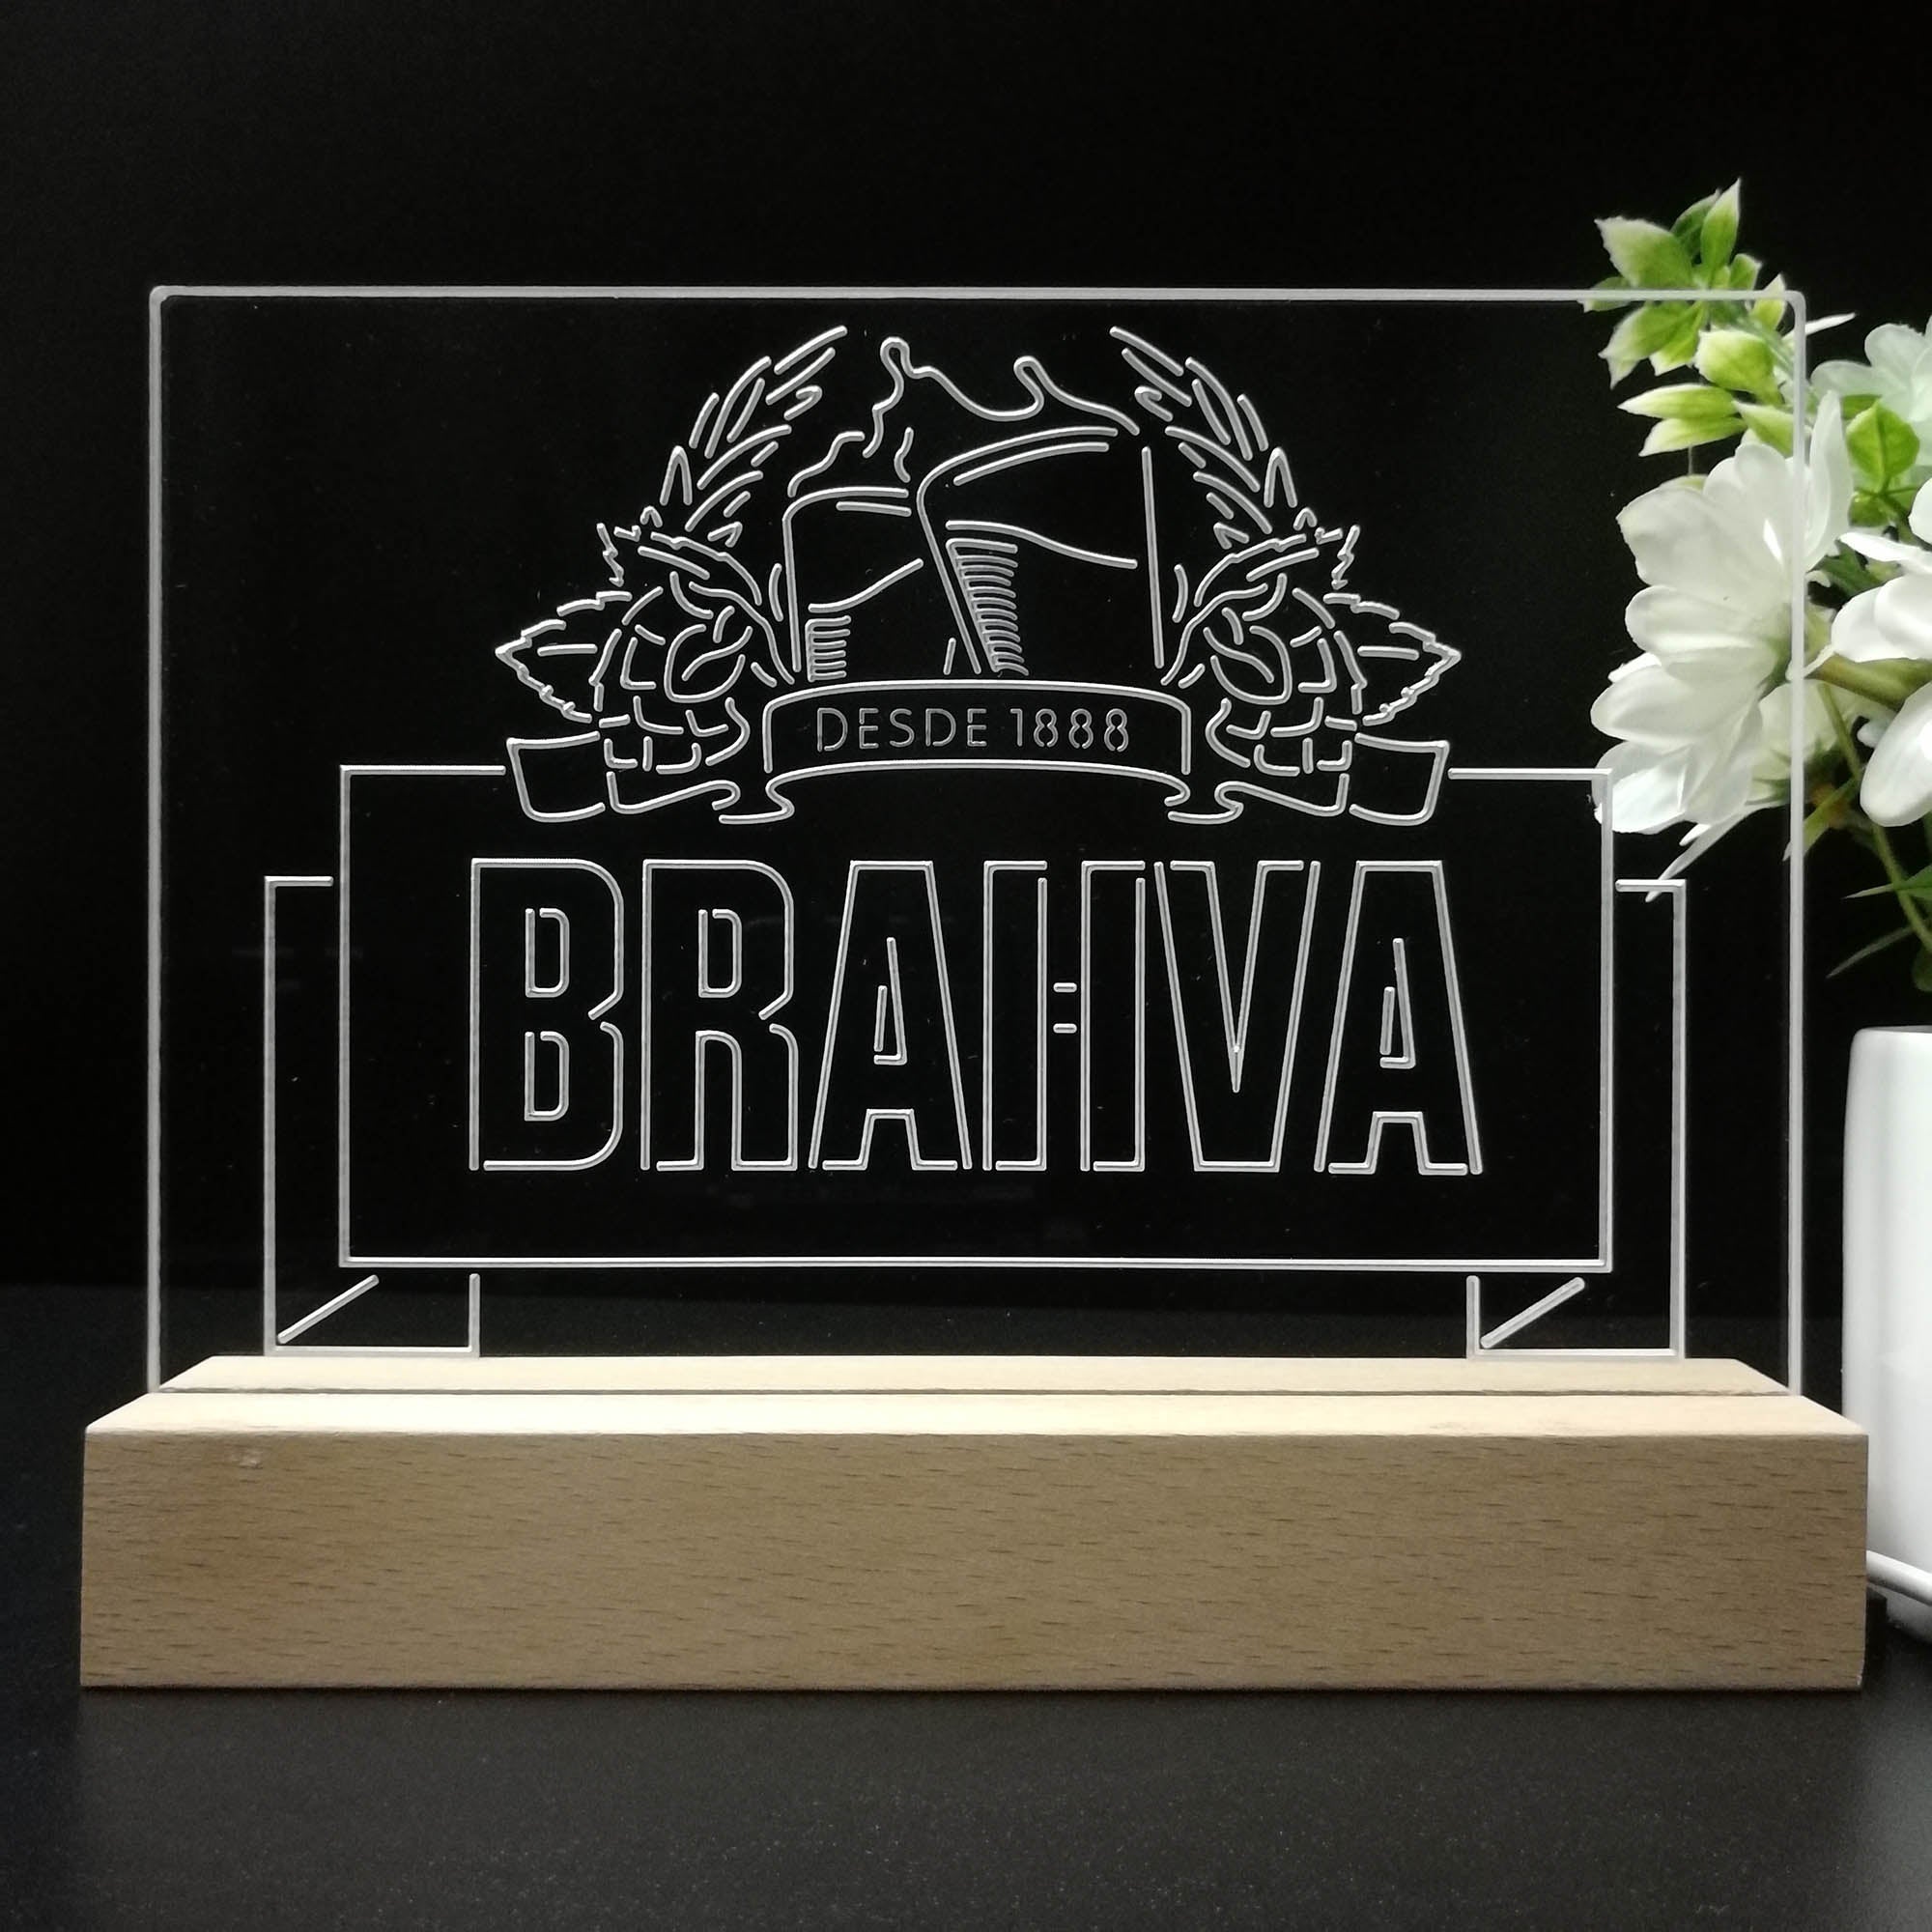 Brahva Night Light LED Sign